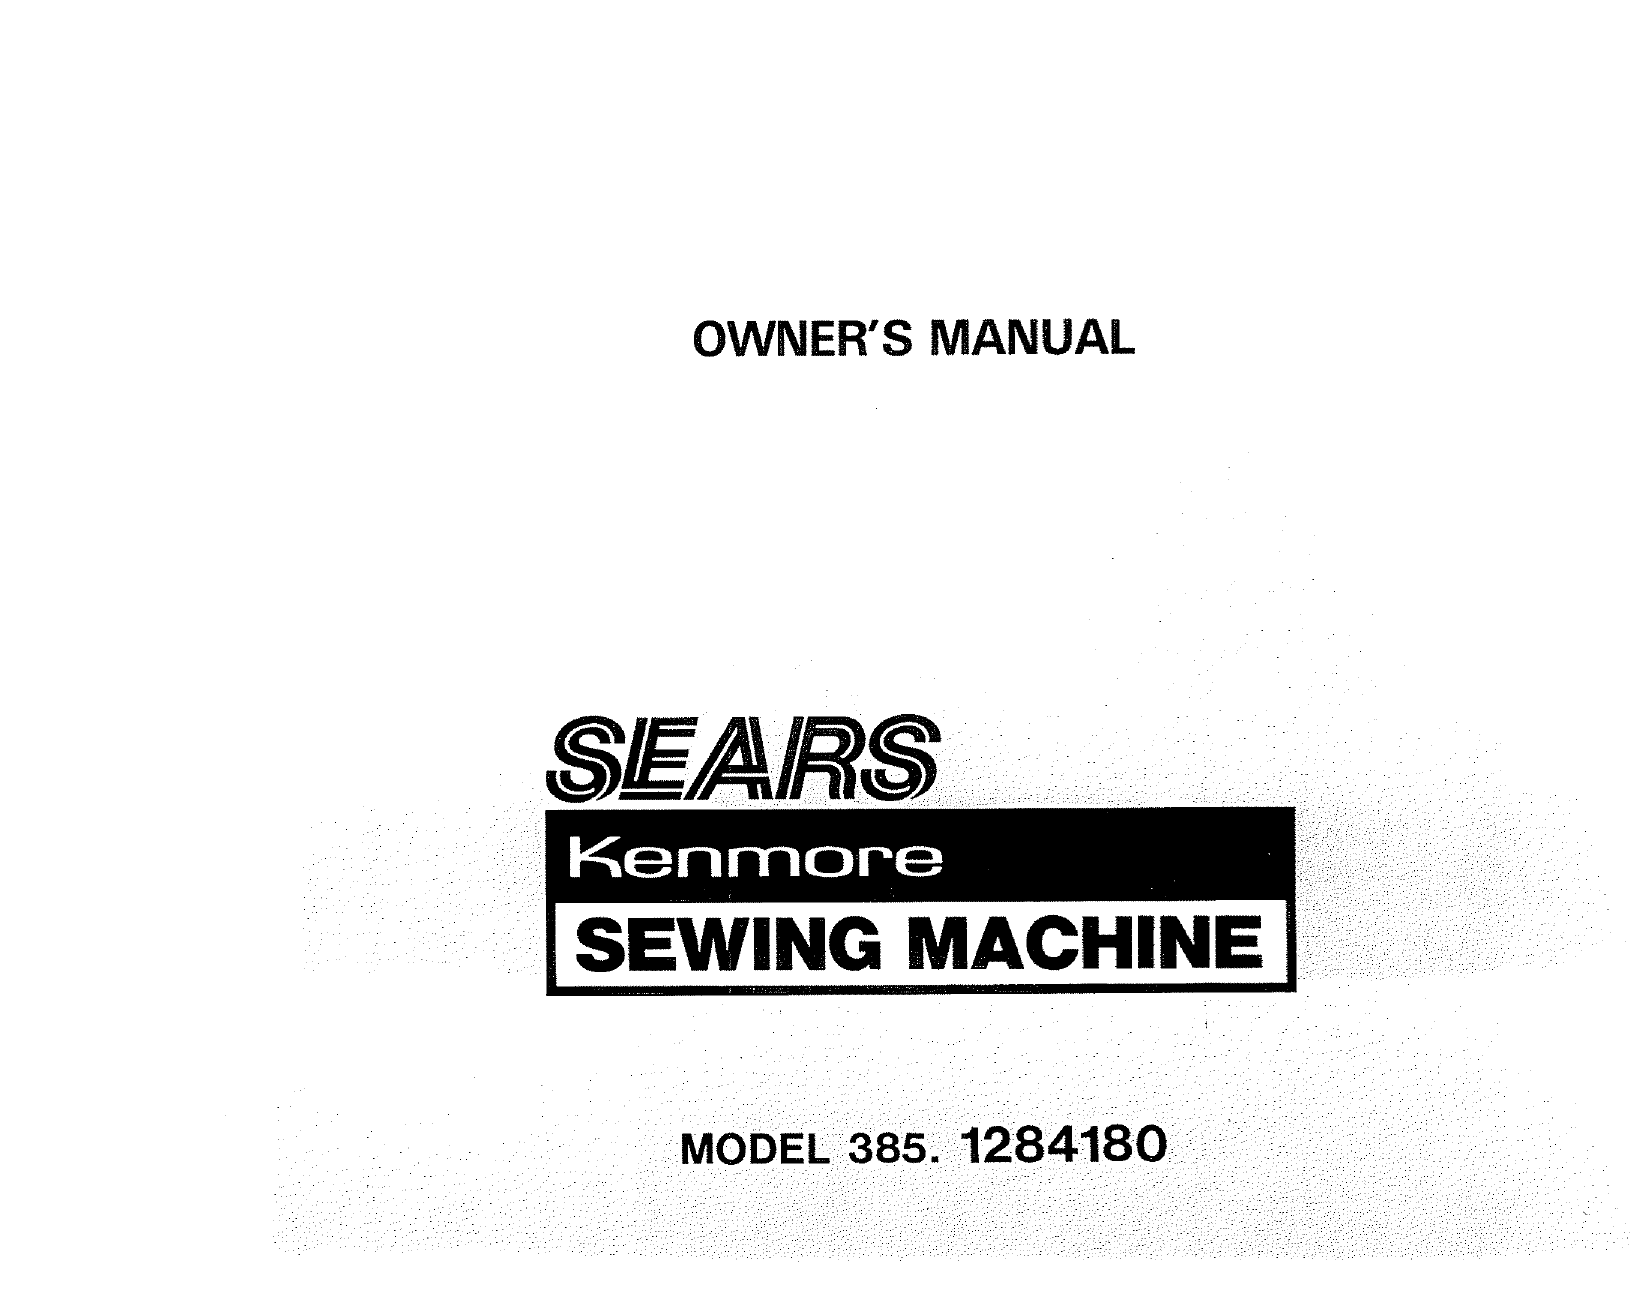 Kenmore 385.1154180, 385.1284180 sewing machine manual Preview image 1